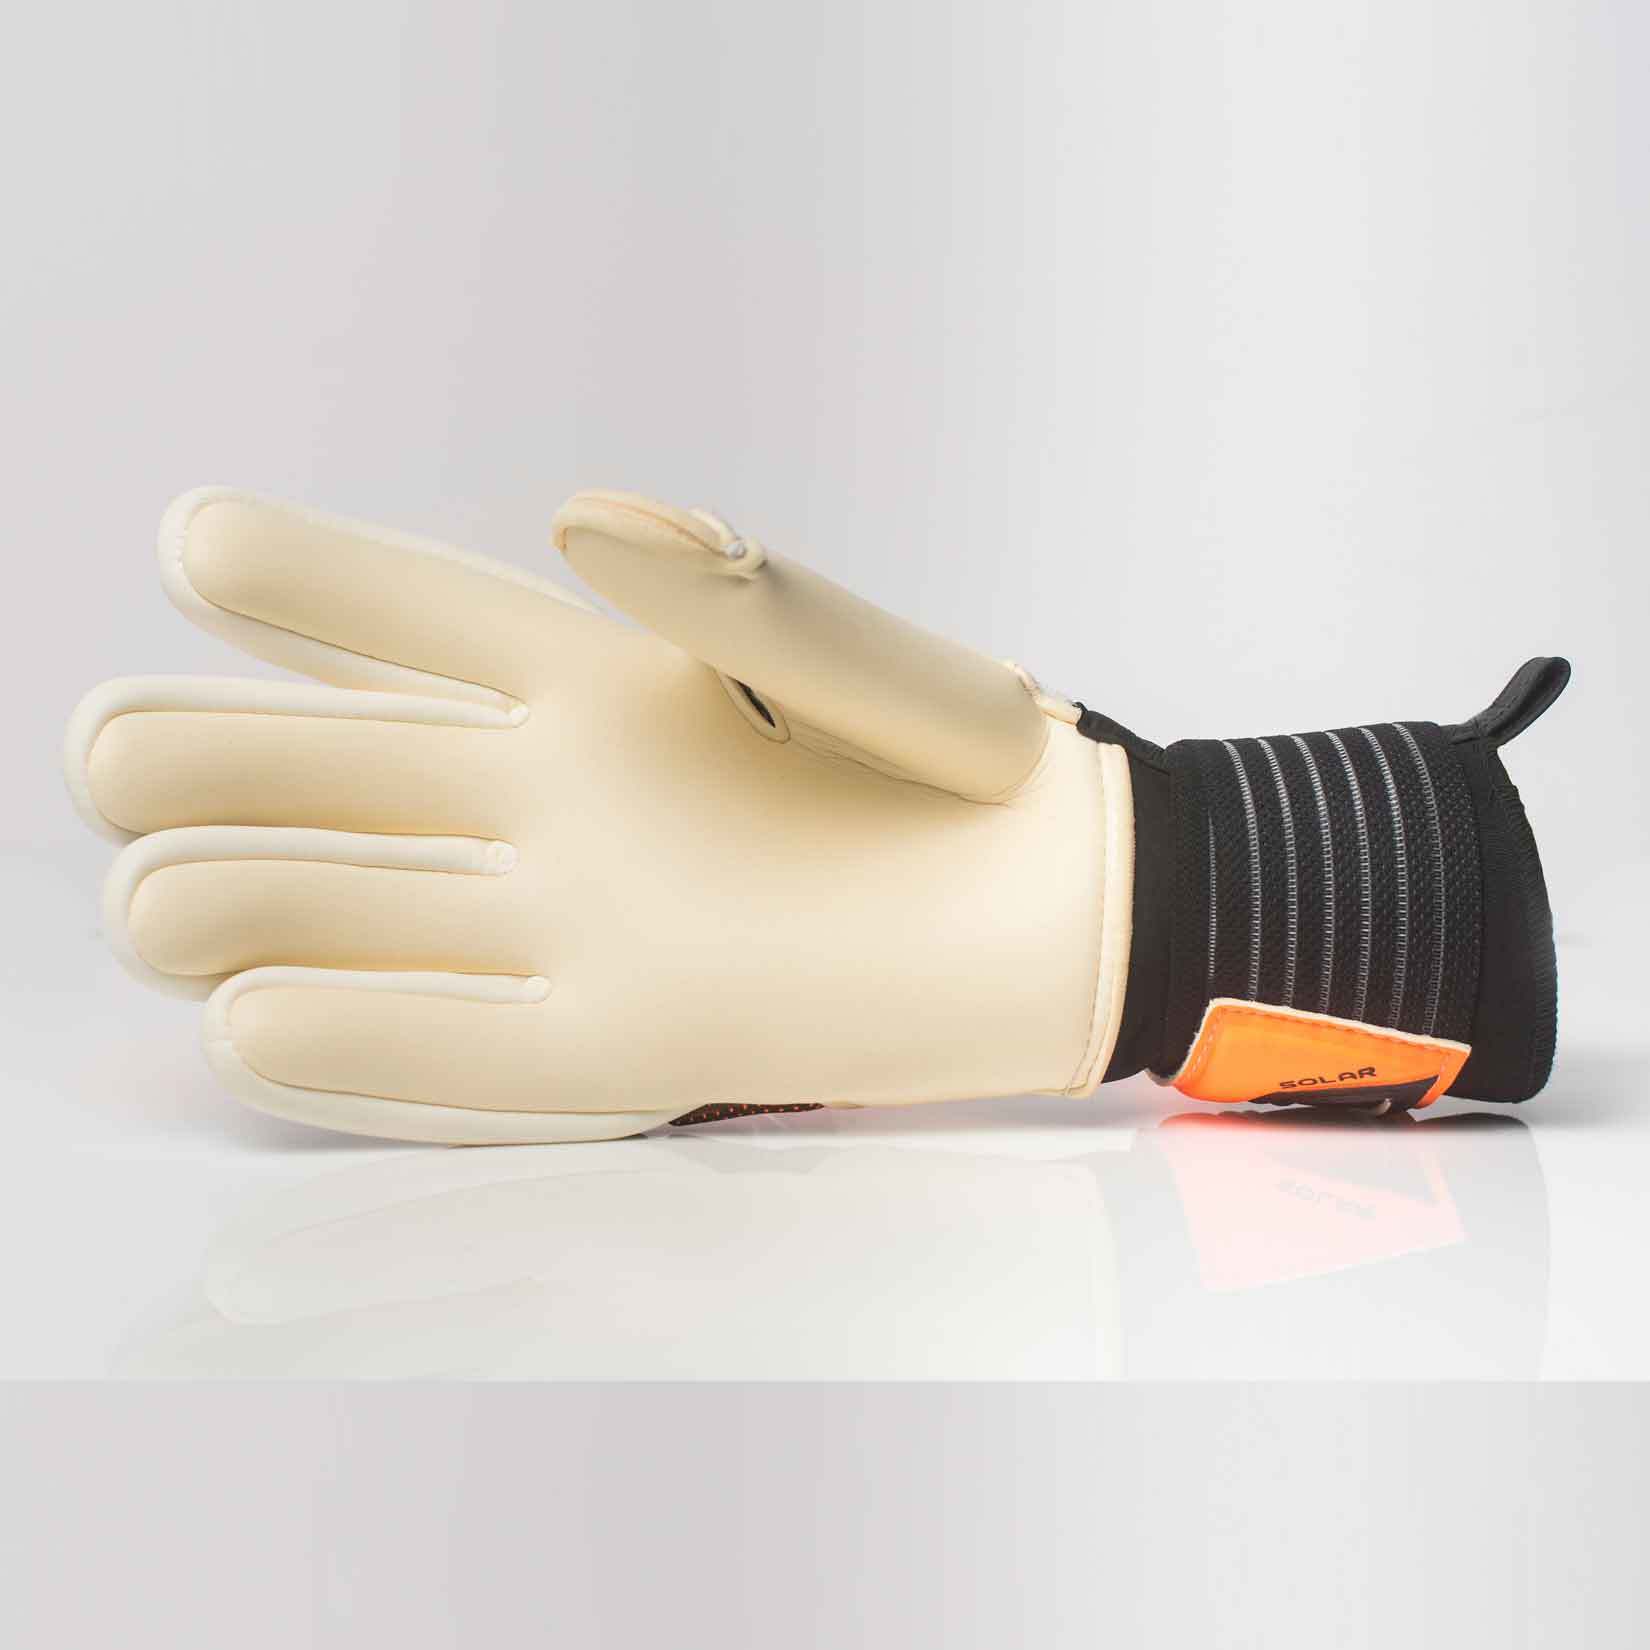 Peak Solar Pro Orange Goalkeeper Gloves